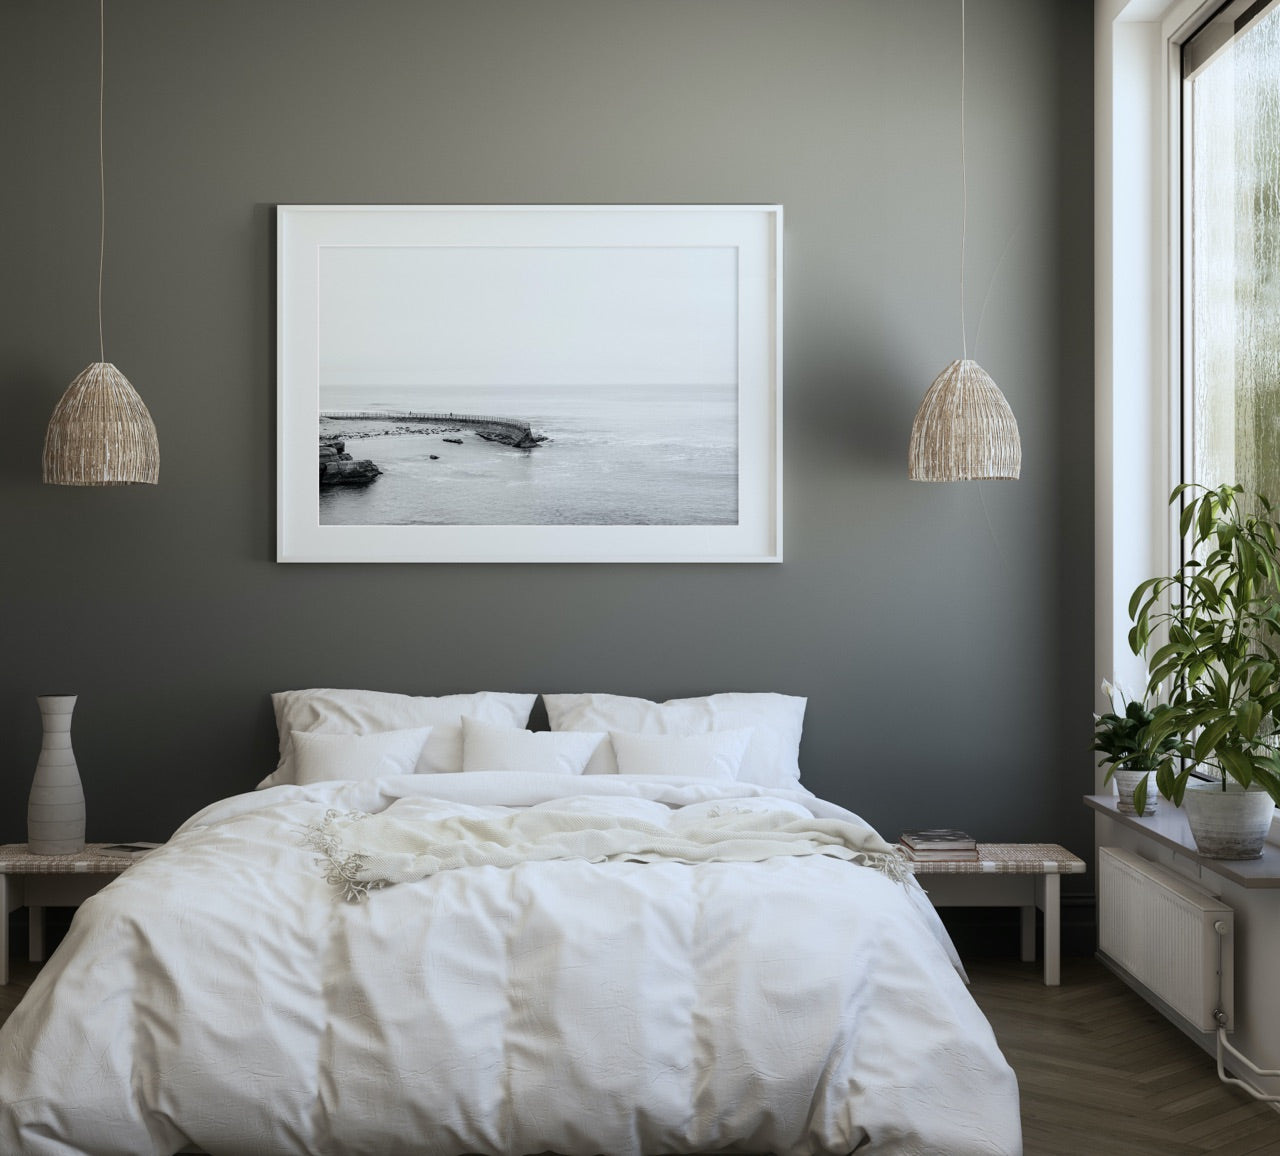 Black and White art print in bedroom